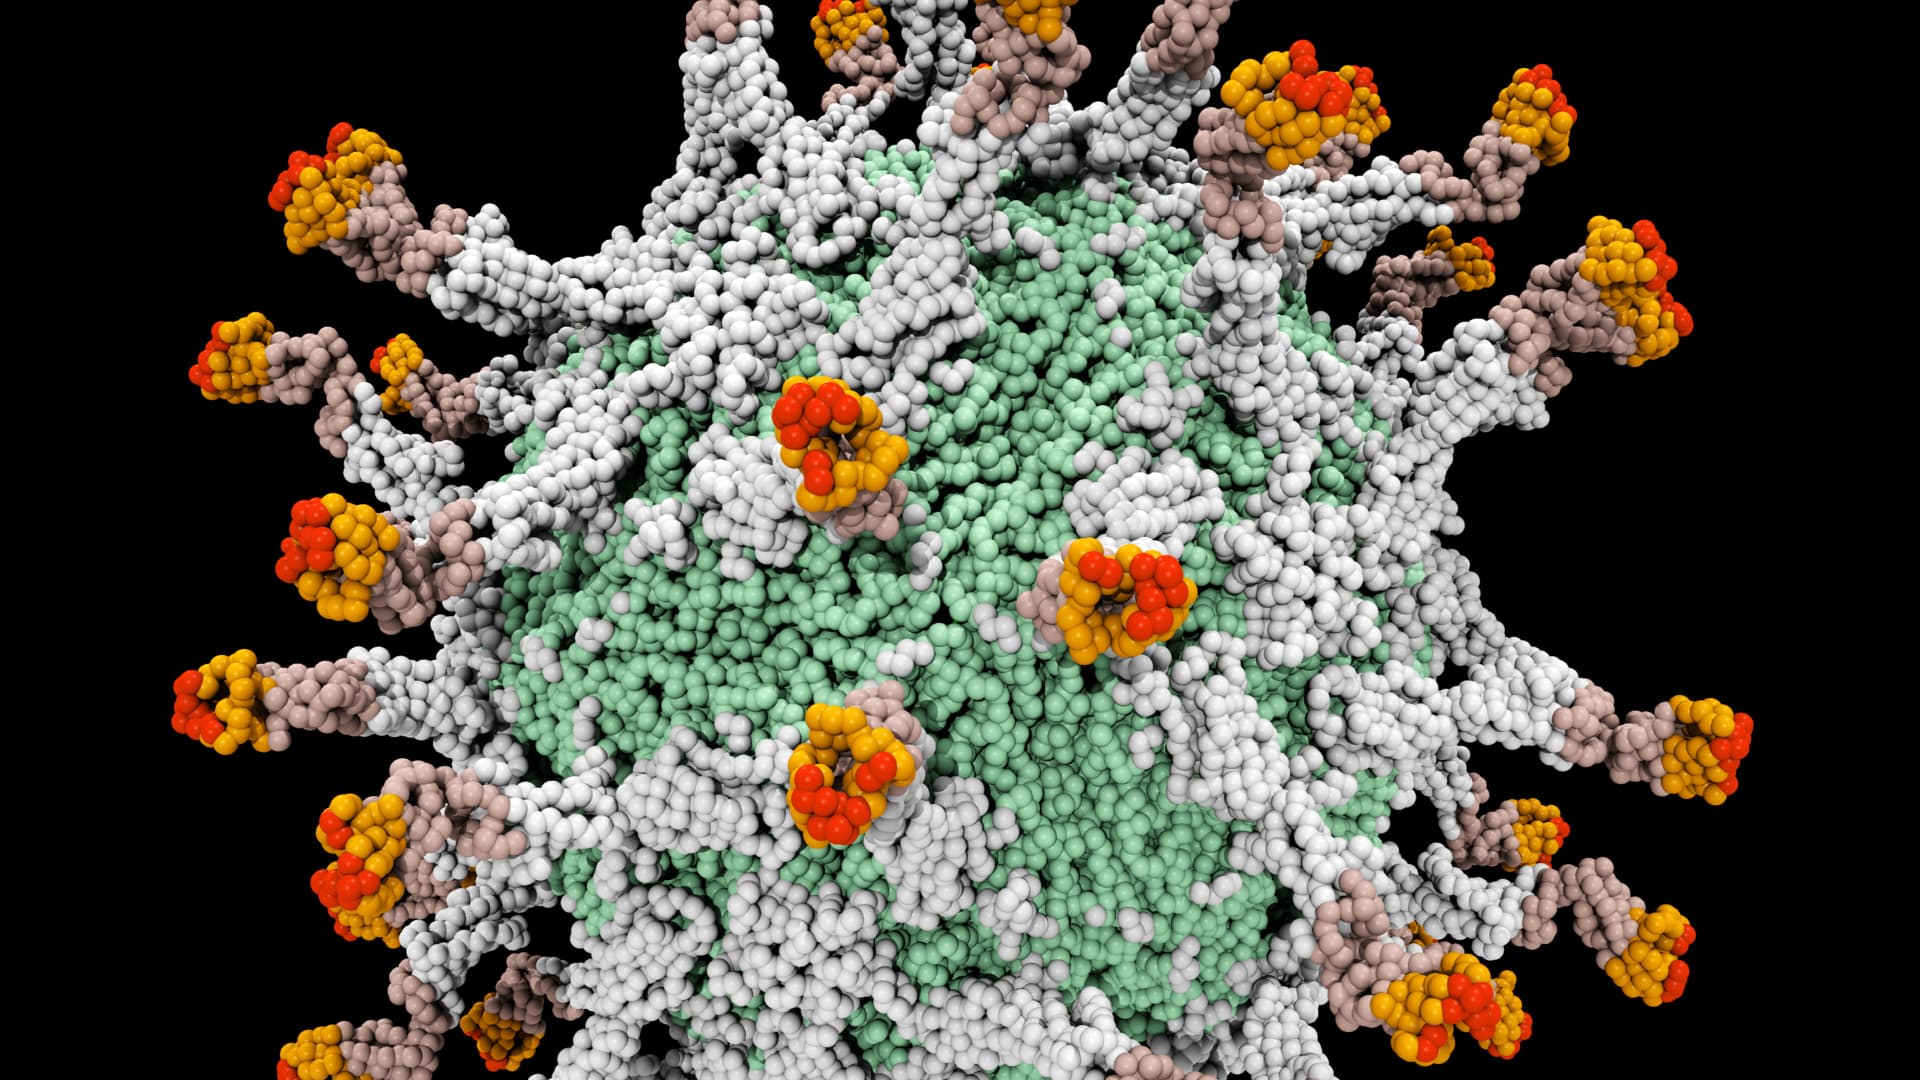 Digitally generated image of 3D molecular model of polio virus